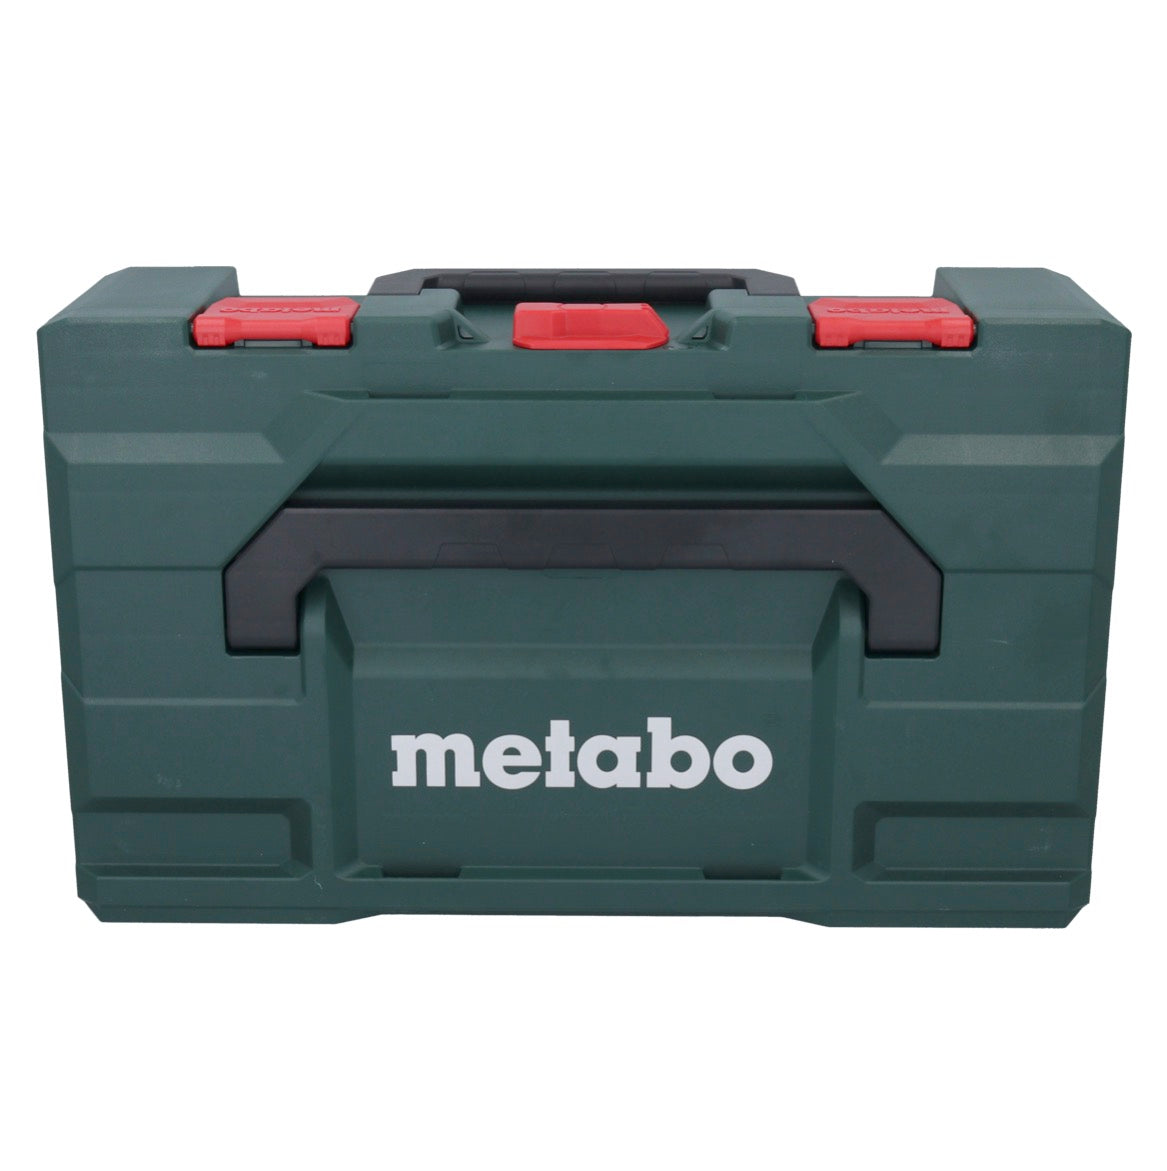 Metabo WPB 18 LT BL 11-125 Quick Akku Winkelschleifer 18 V 125 mm Brushless + 2x Akku 8,0 Ah + Ladegerät + metaBOX - Toolbrothers